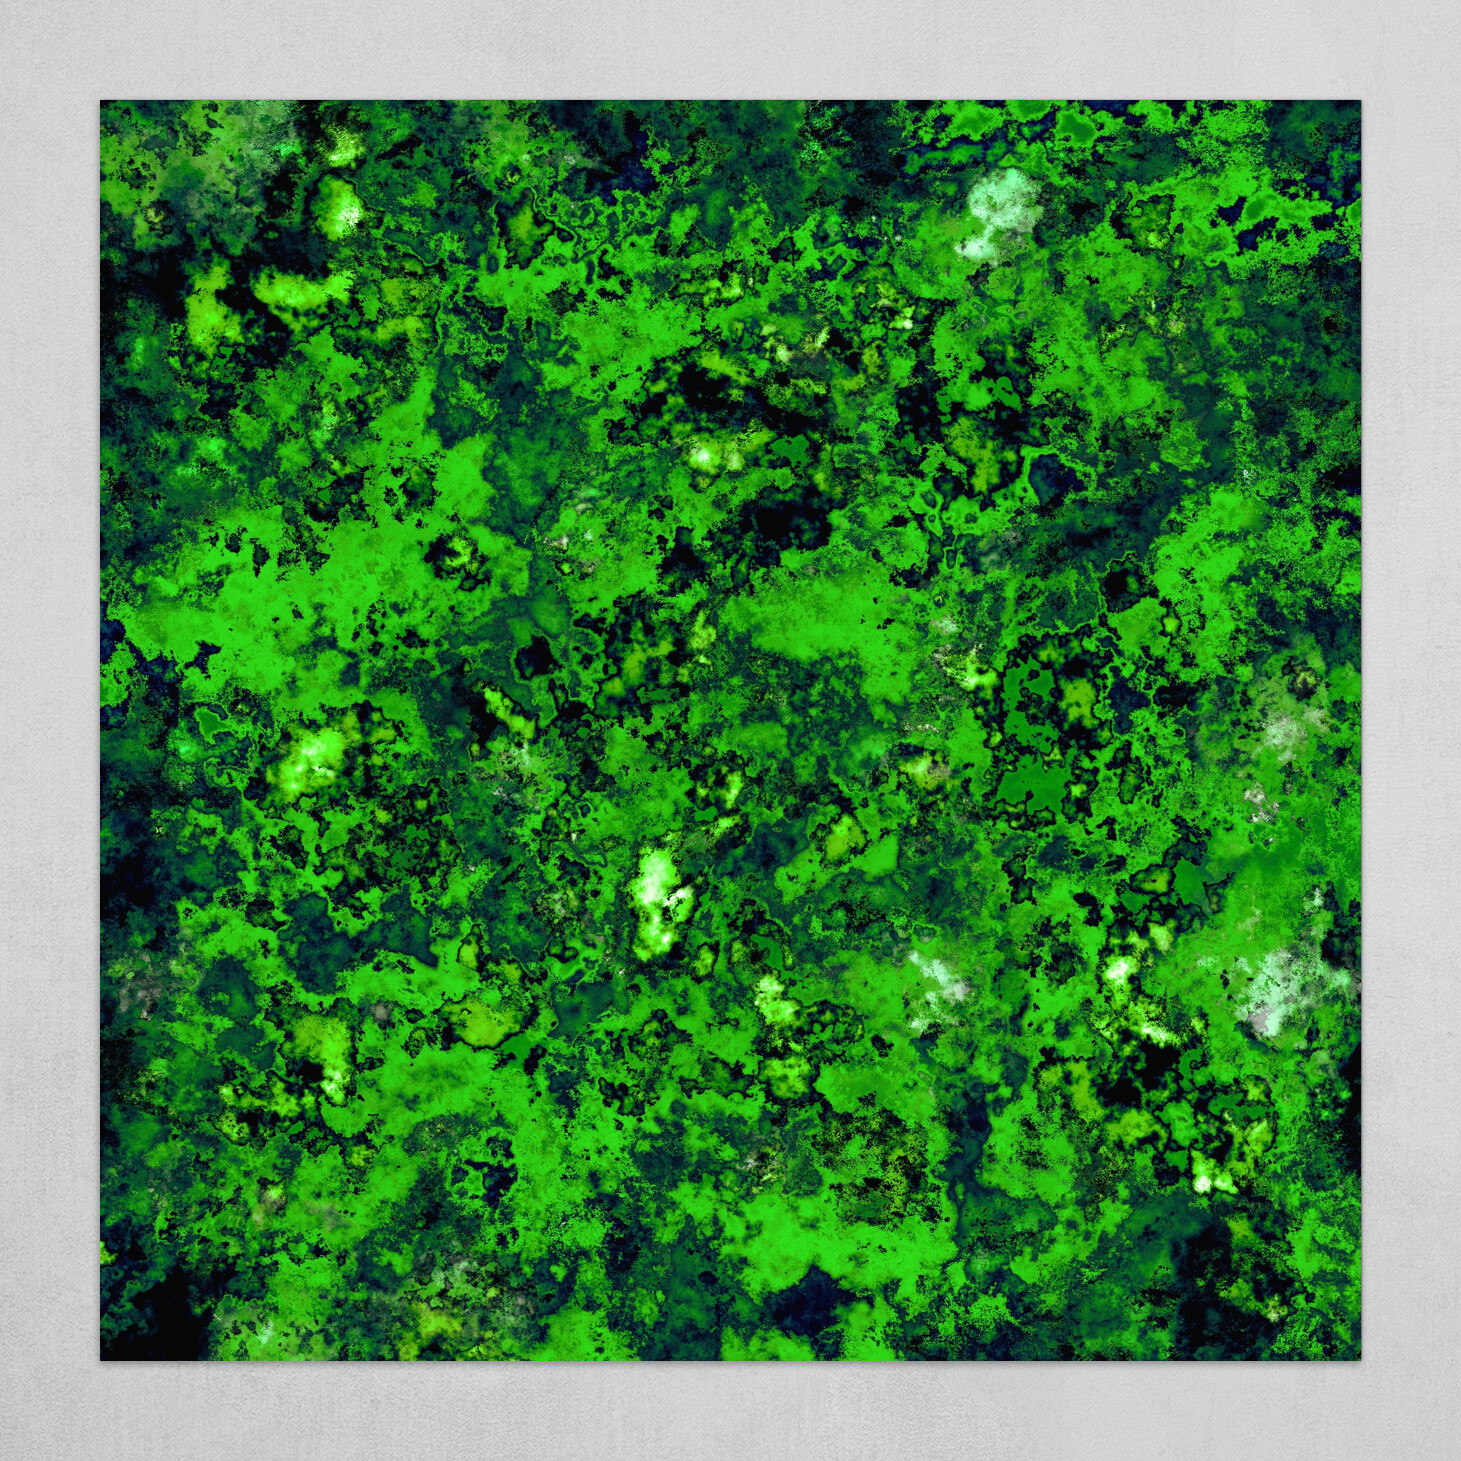 Green glass fragments